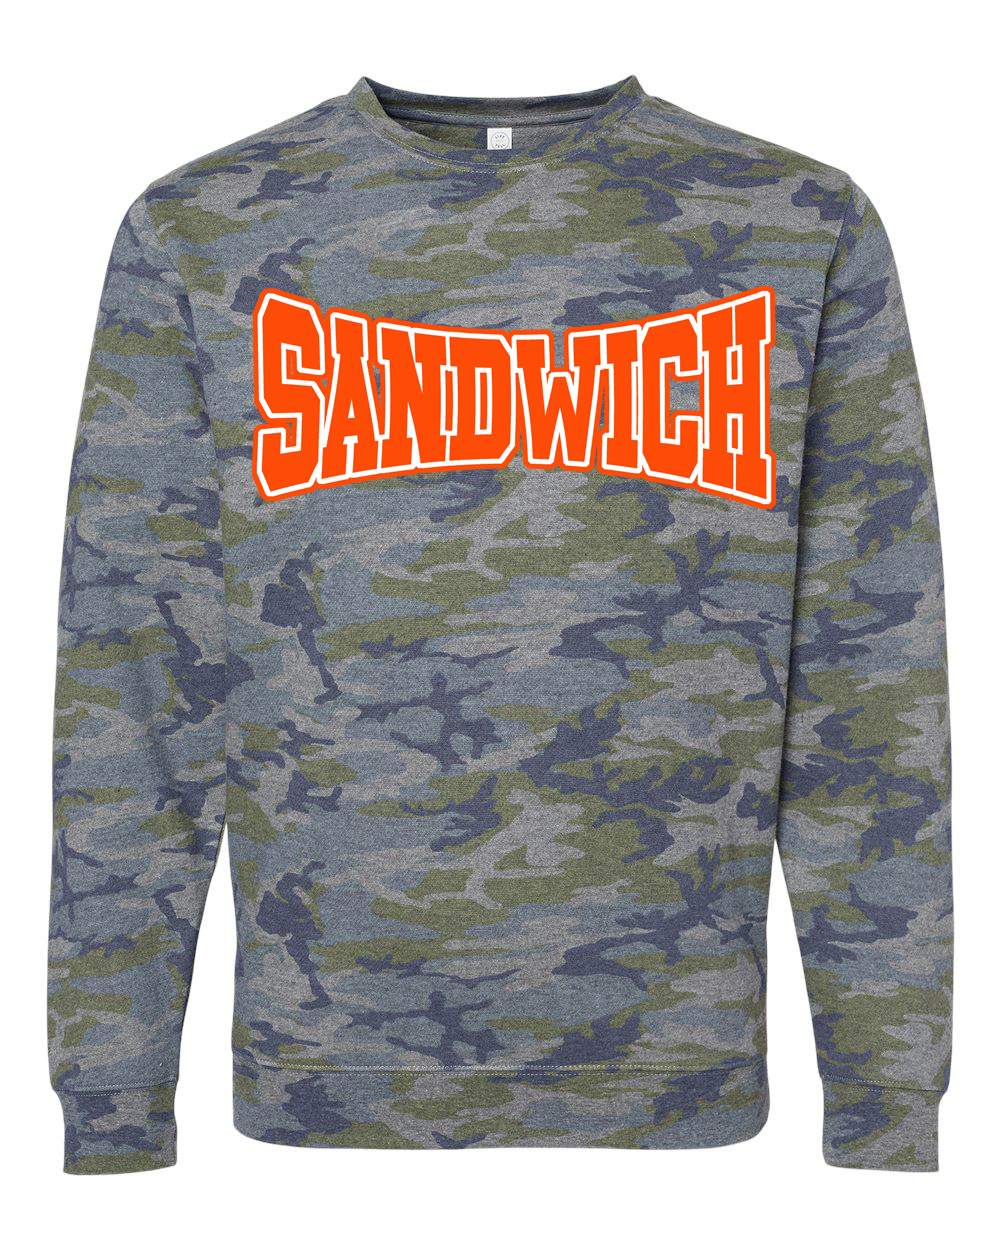 Sandwich Squeeze Camo Crewneck Sweatshirt